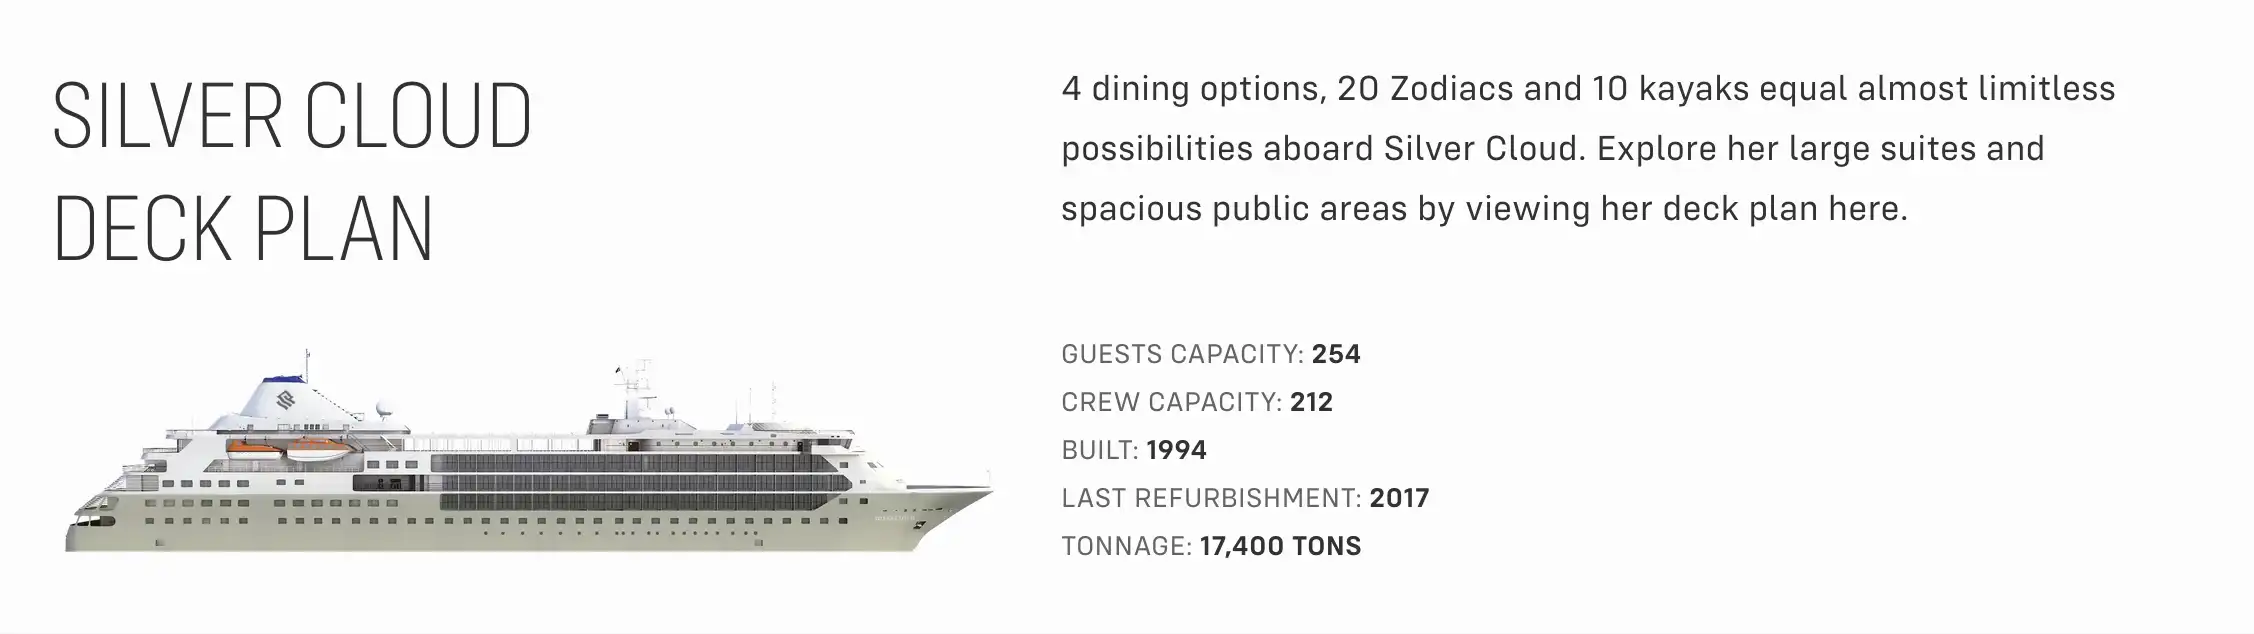 SILVER-CLOUD-ship-deck-plan-image